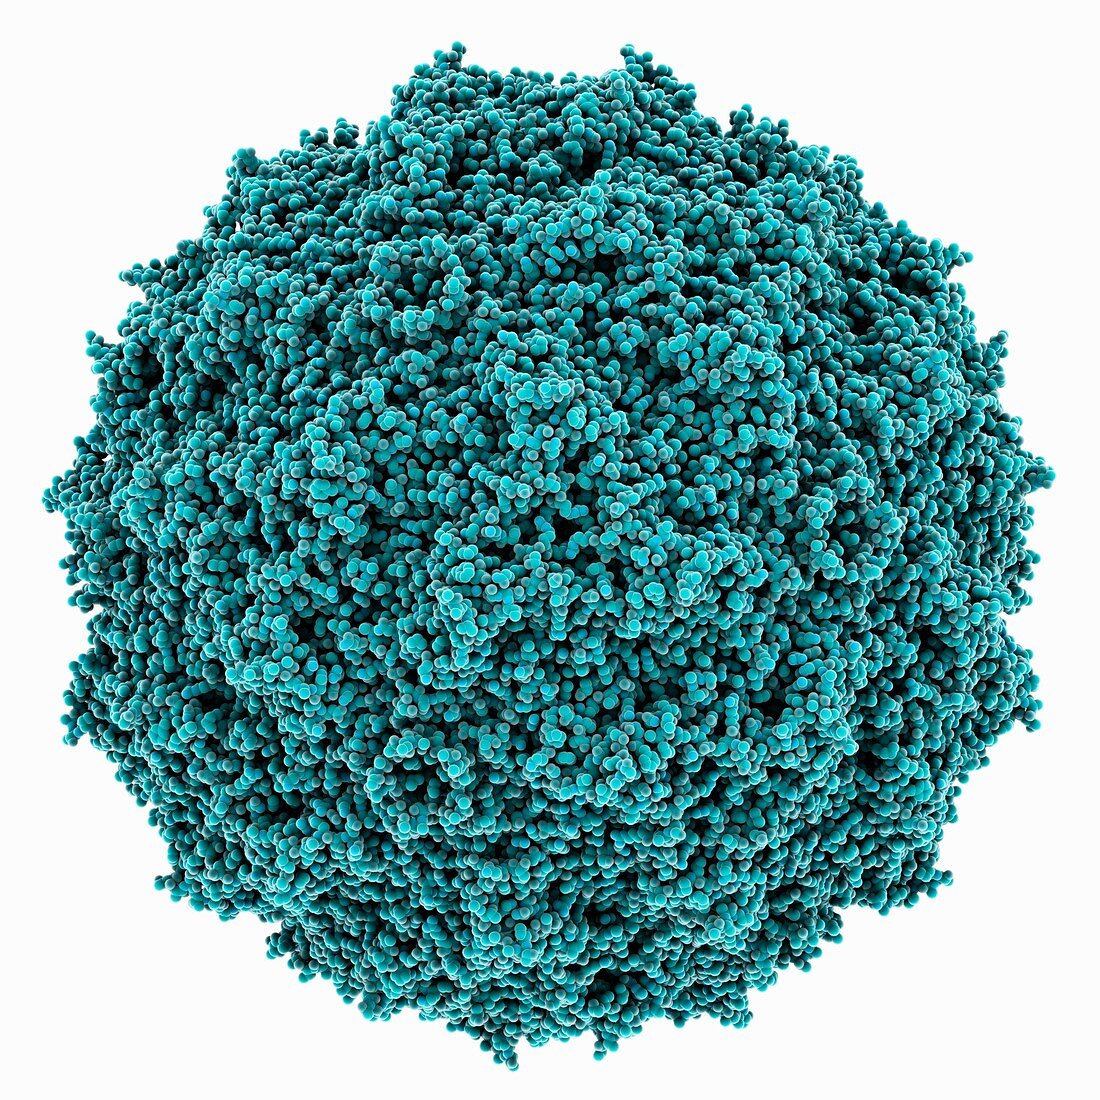 Bombyx mori densovirus 1 capsid